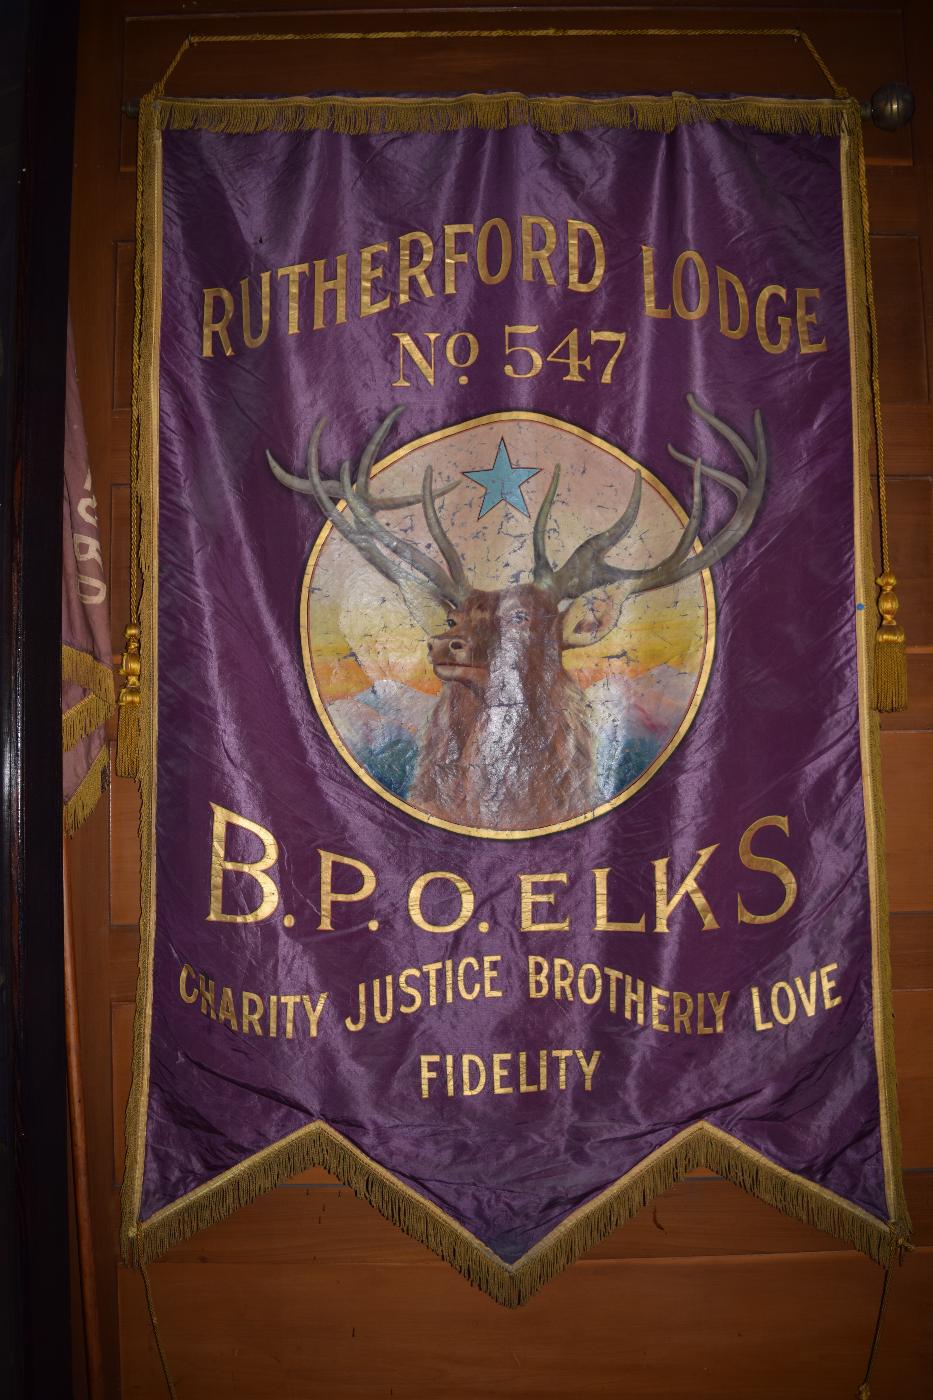 Our original banner